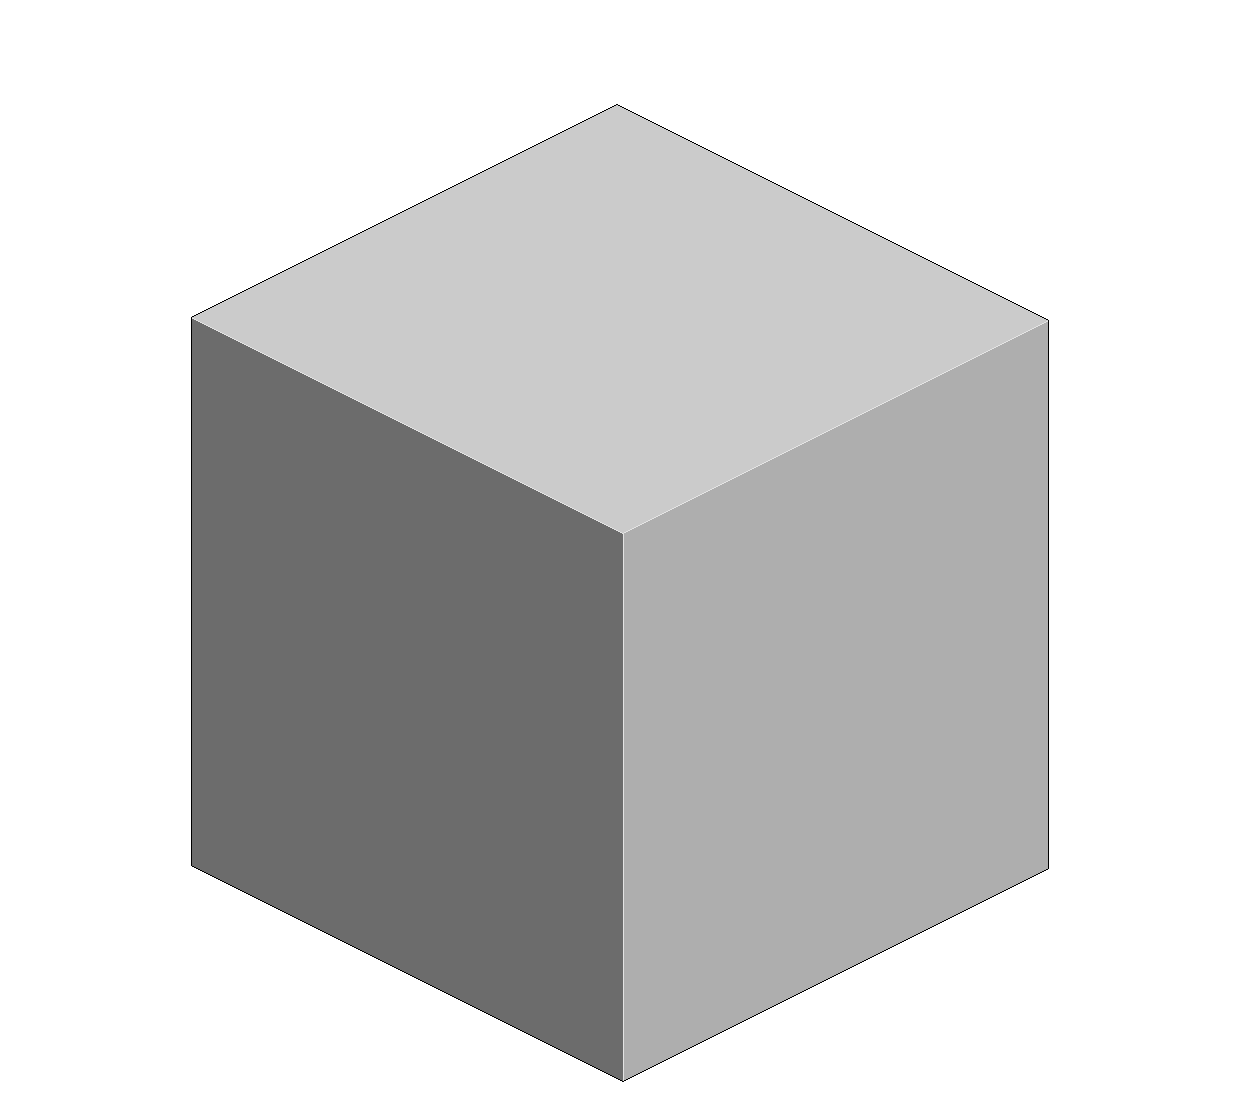 Blender-mesh-cube.png PlusPng